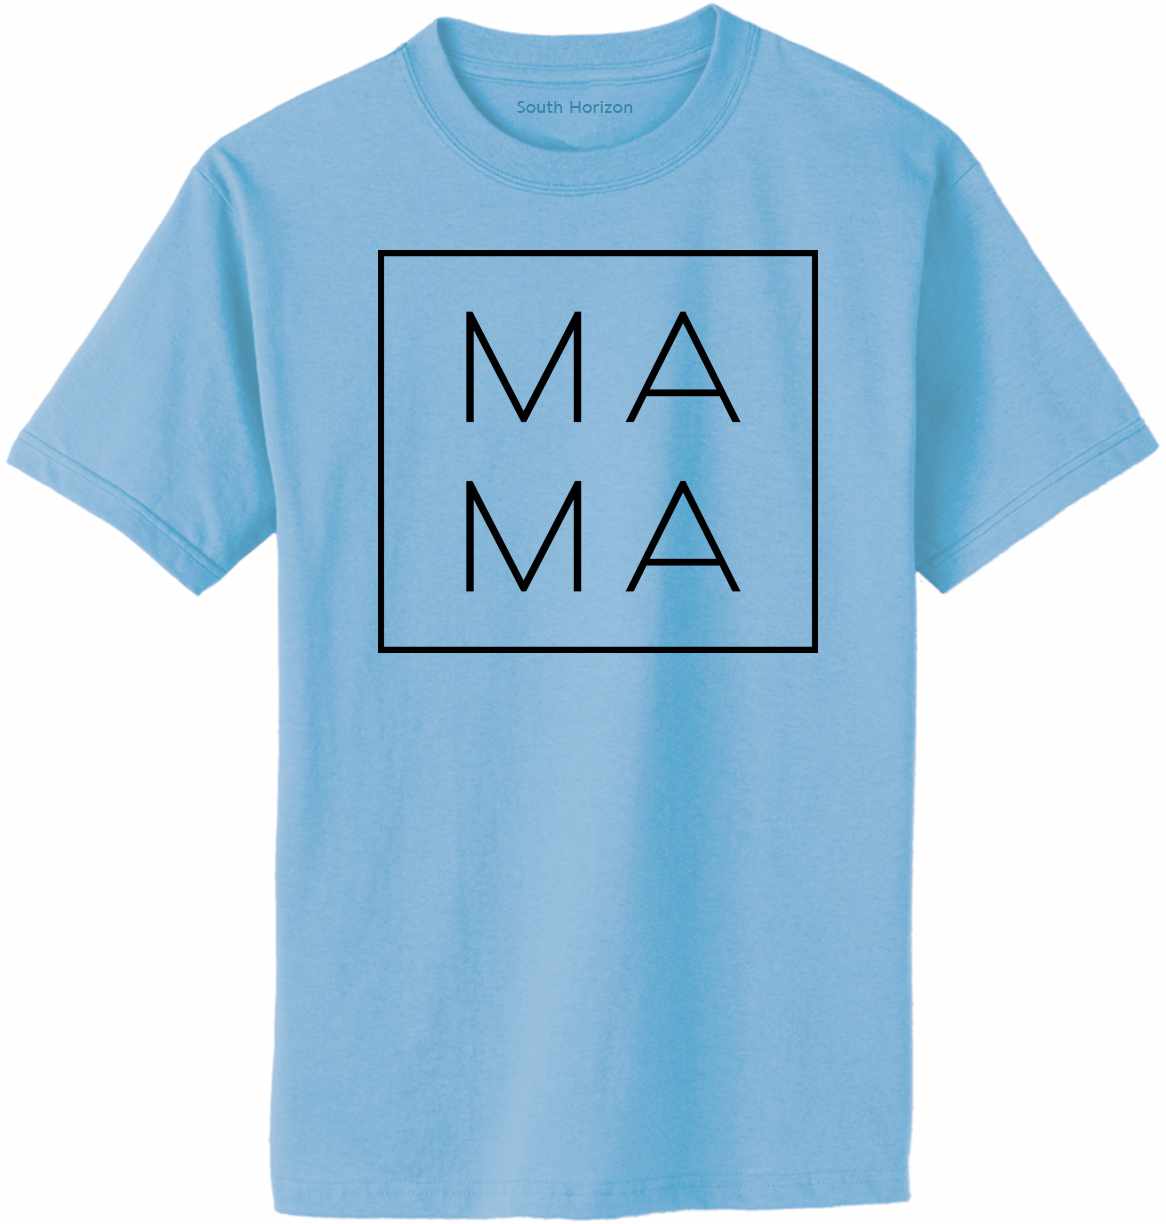 MA MA - Box on Adult T-Shirt (#1251-1)